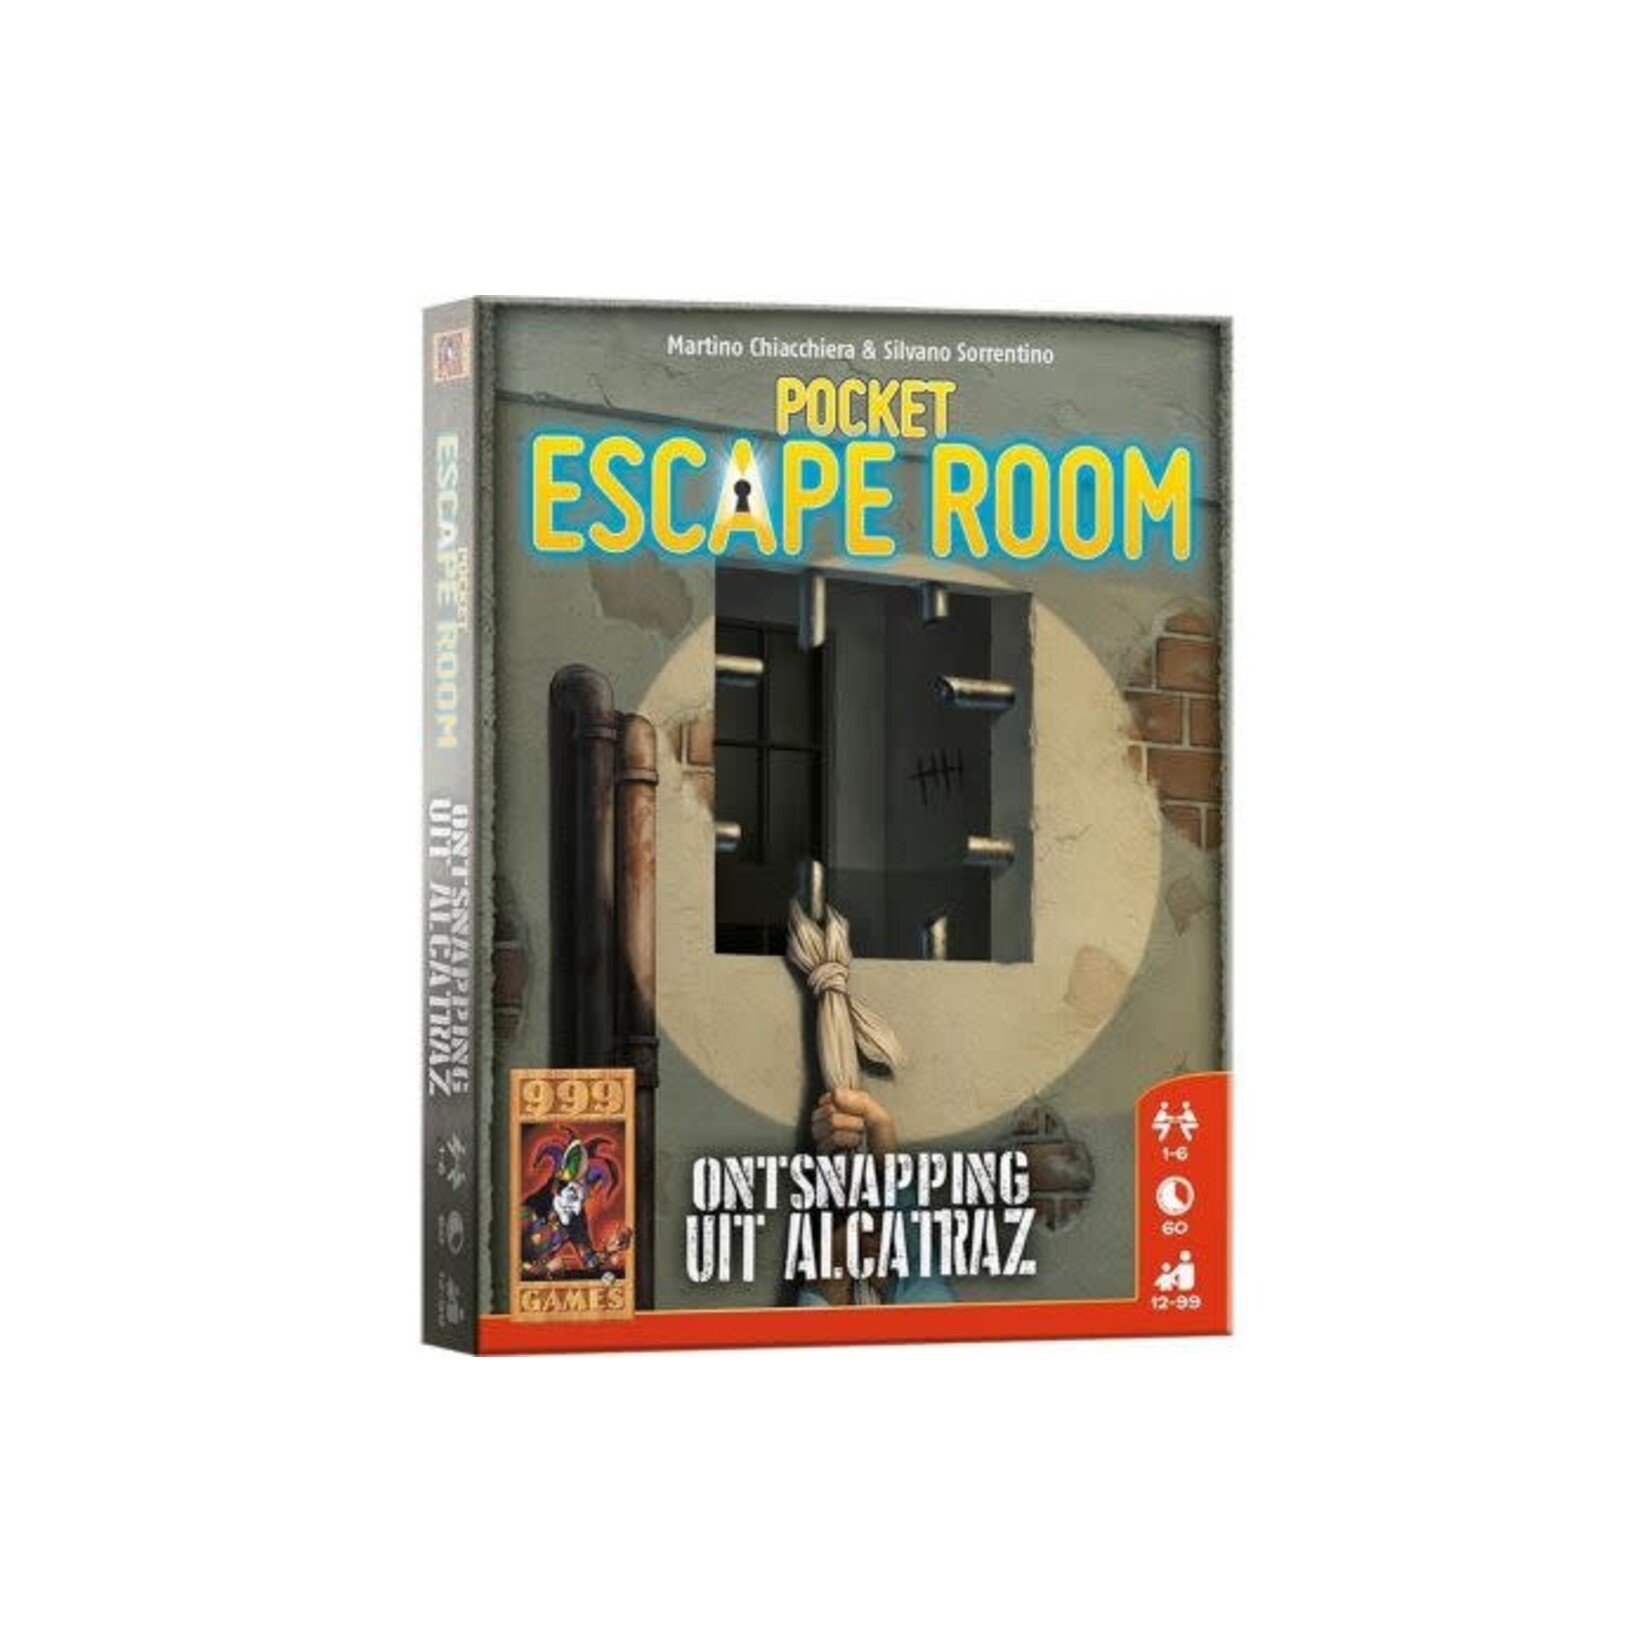 999 Games 999 Games pocket Escape Room - Ontsnapping uit Alcatraz